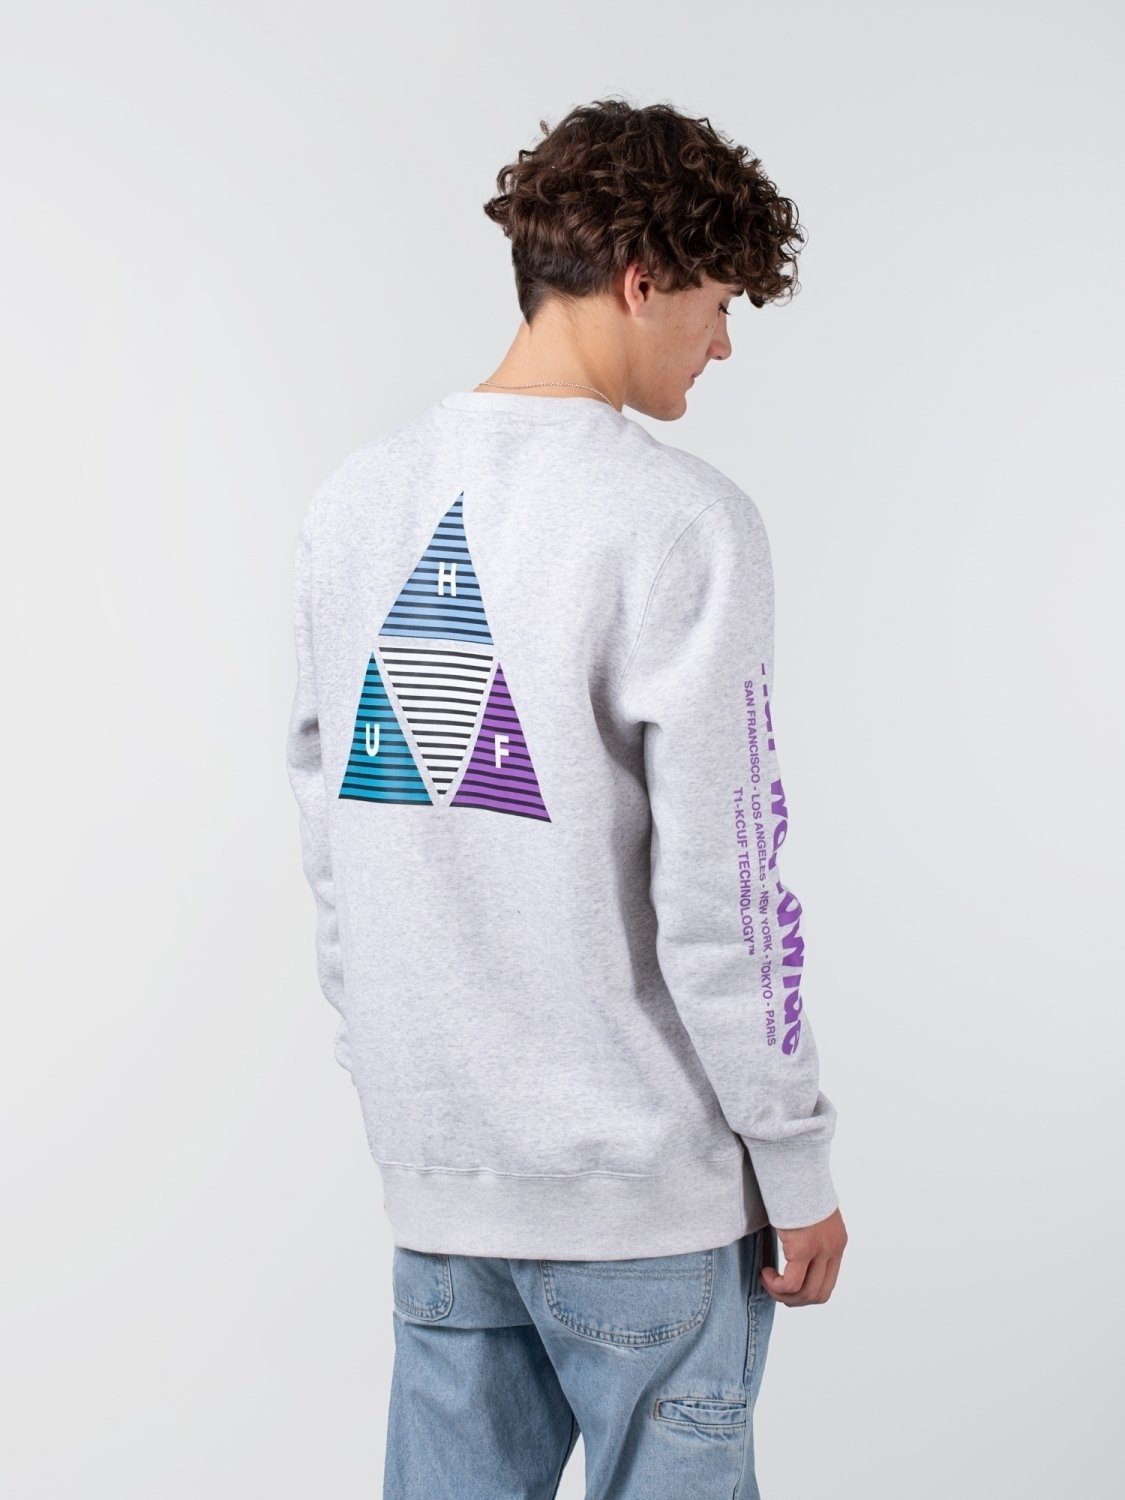 Sweatshirt Prism HUF Athletic HUF Sweater Triple Triangle Heather